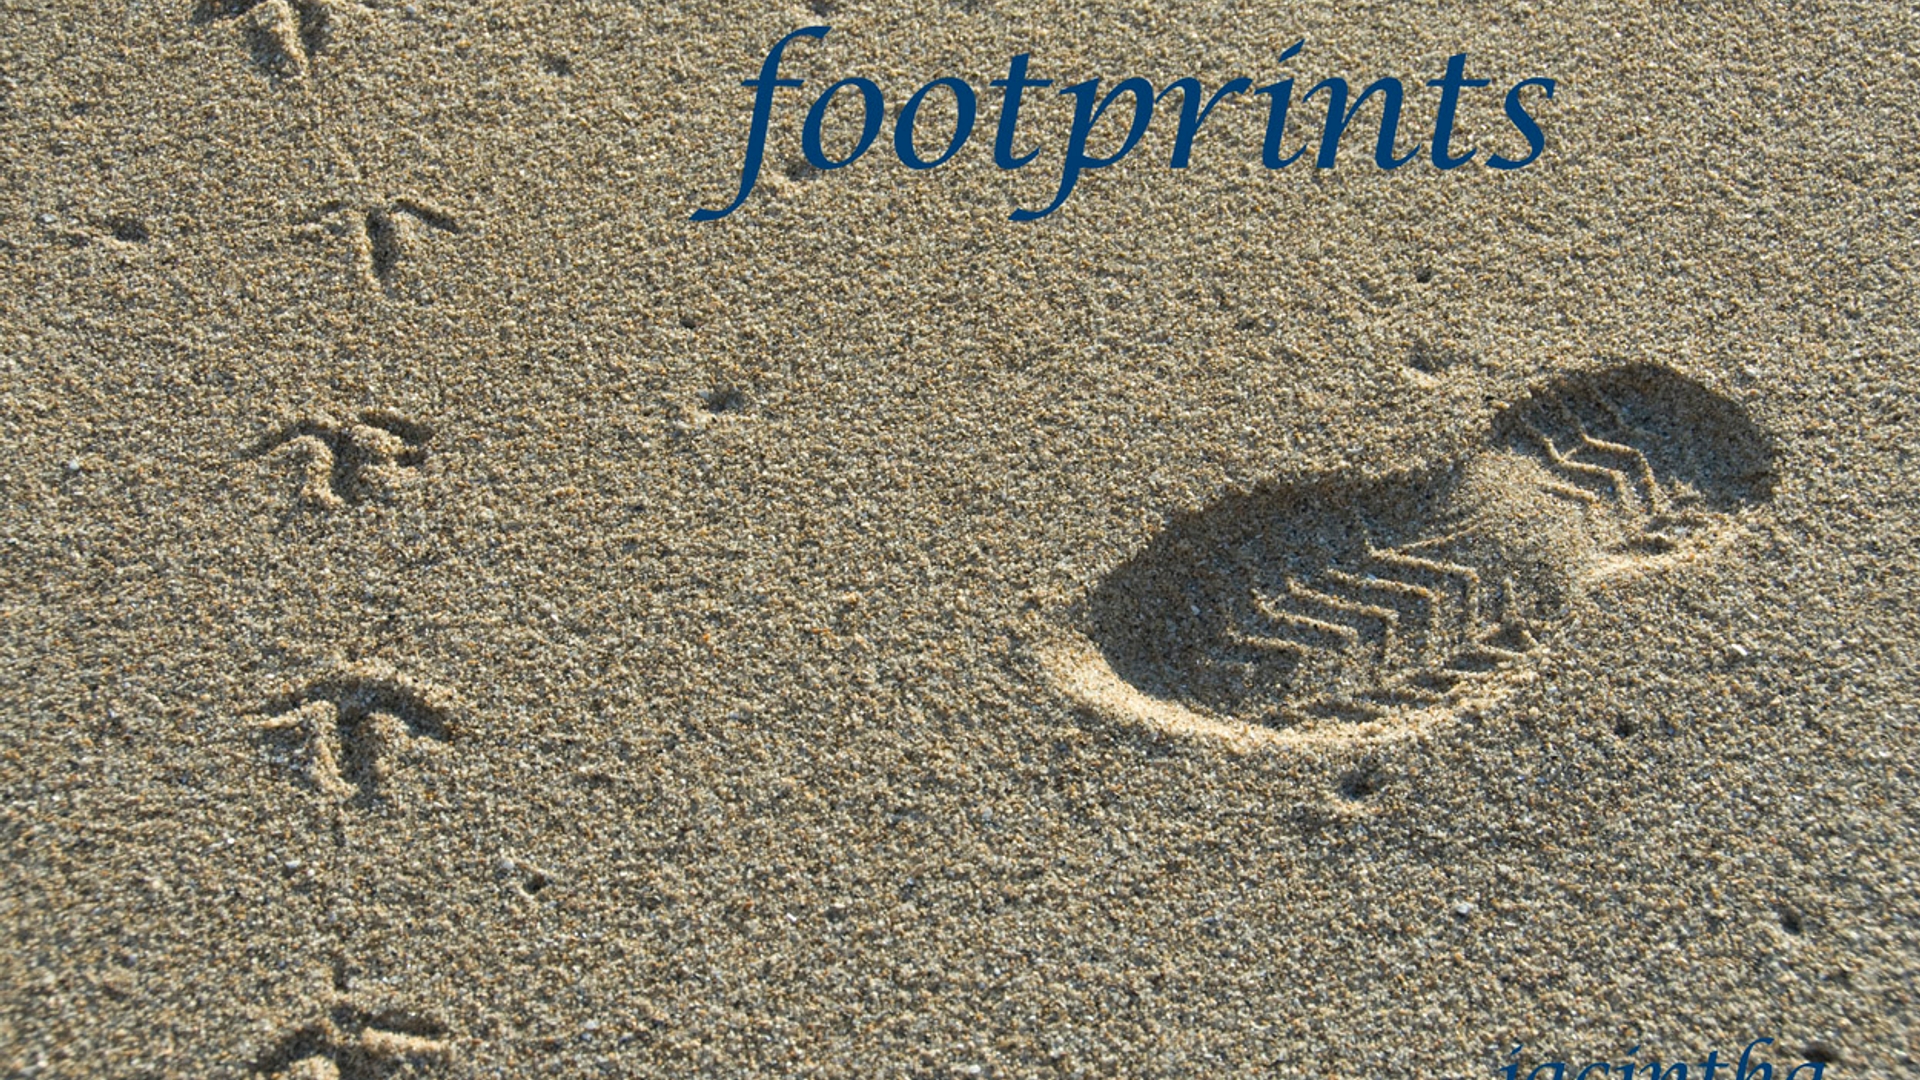 galapagos_footprint.jpg